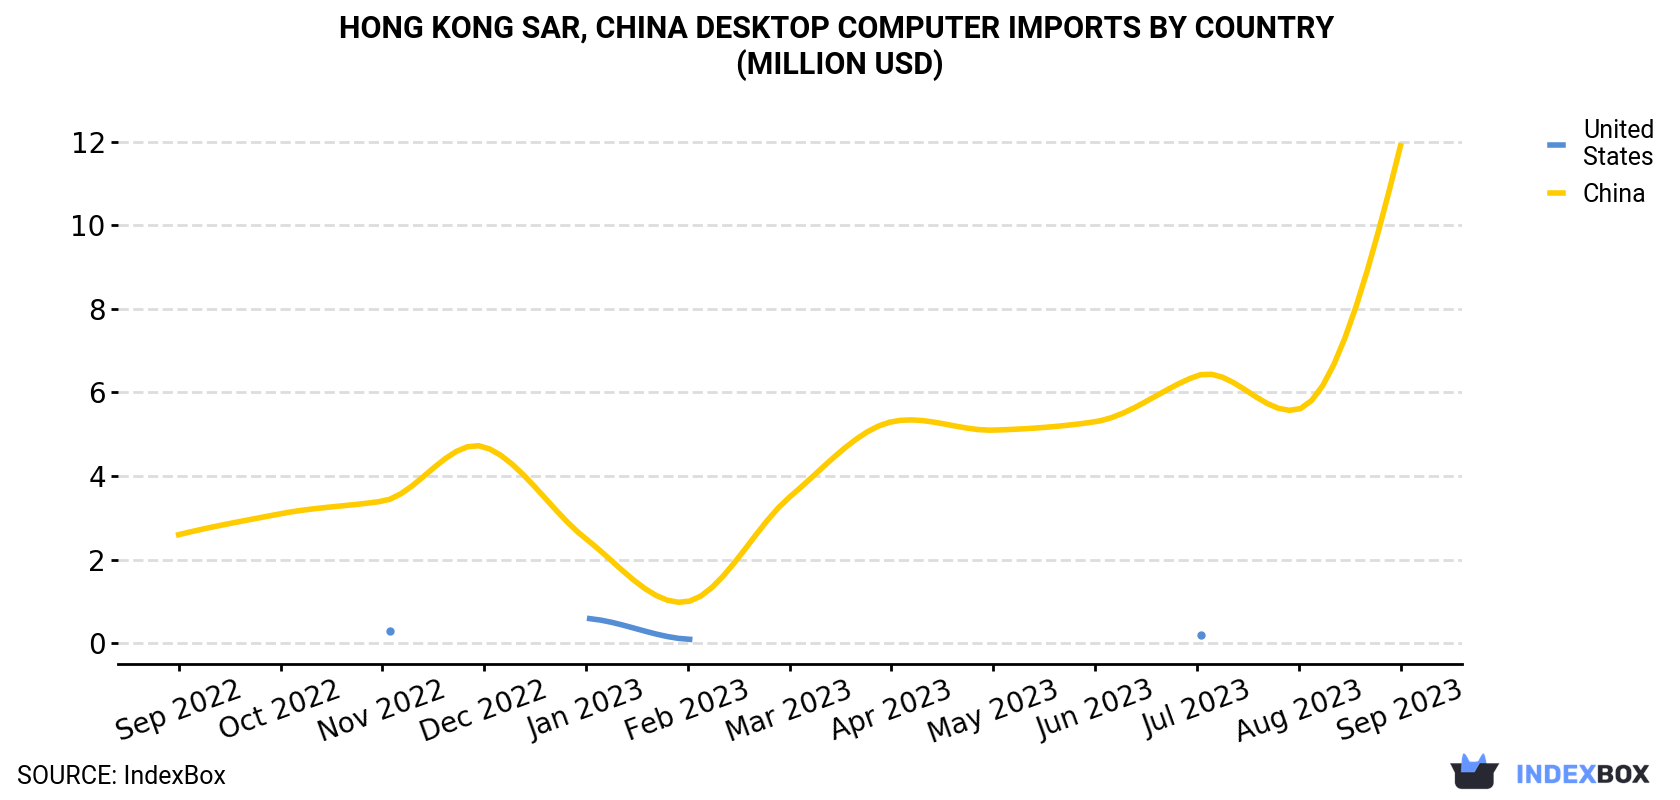 Hong Kong Desktop Computer Imports By Country (Million USD)